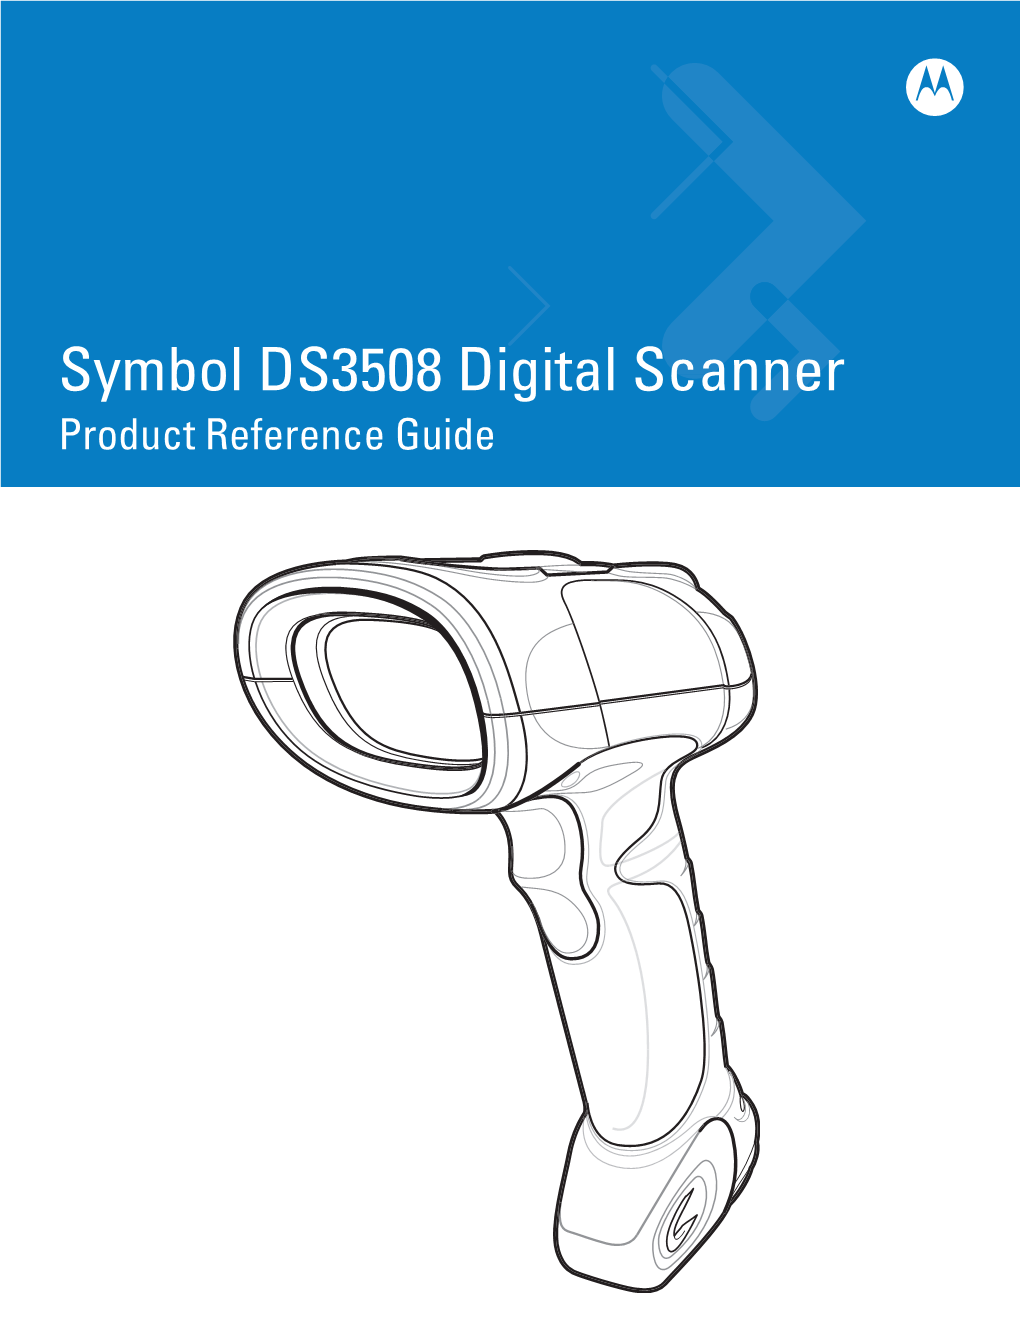 Symbol DS3508 Digital Scanner Product Reference Guide